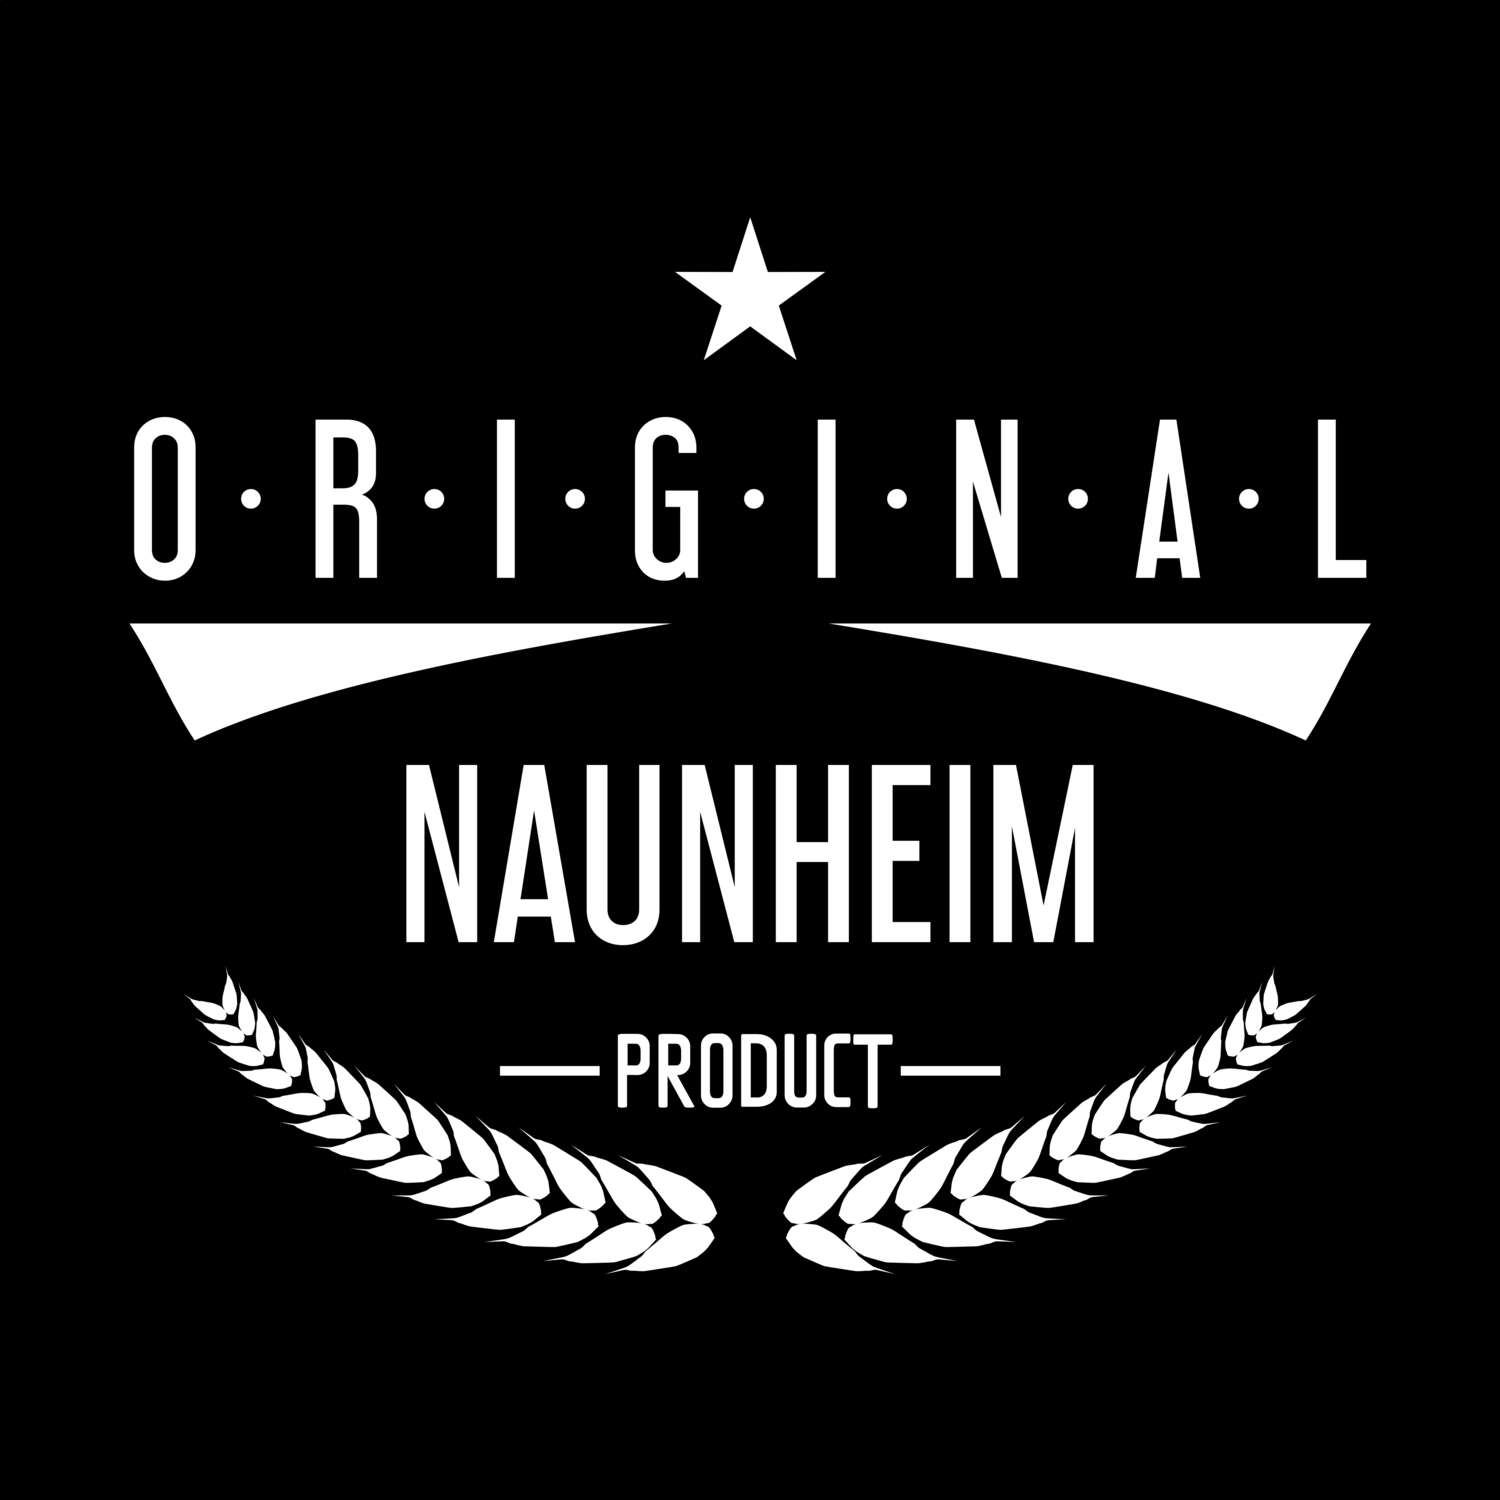 Naunheim T-Shirt »Original Product«